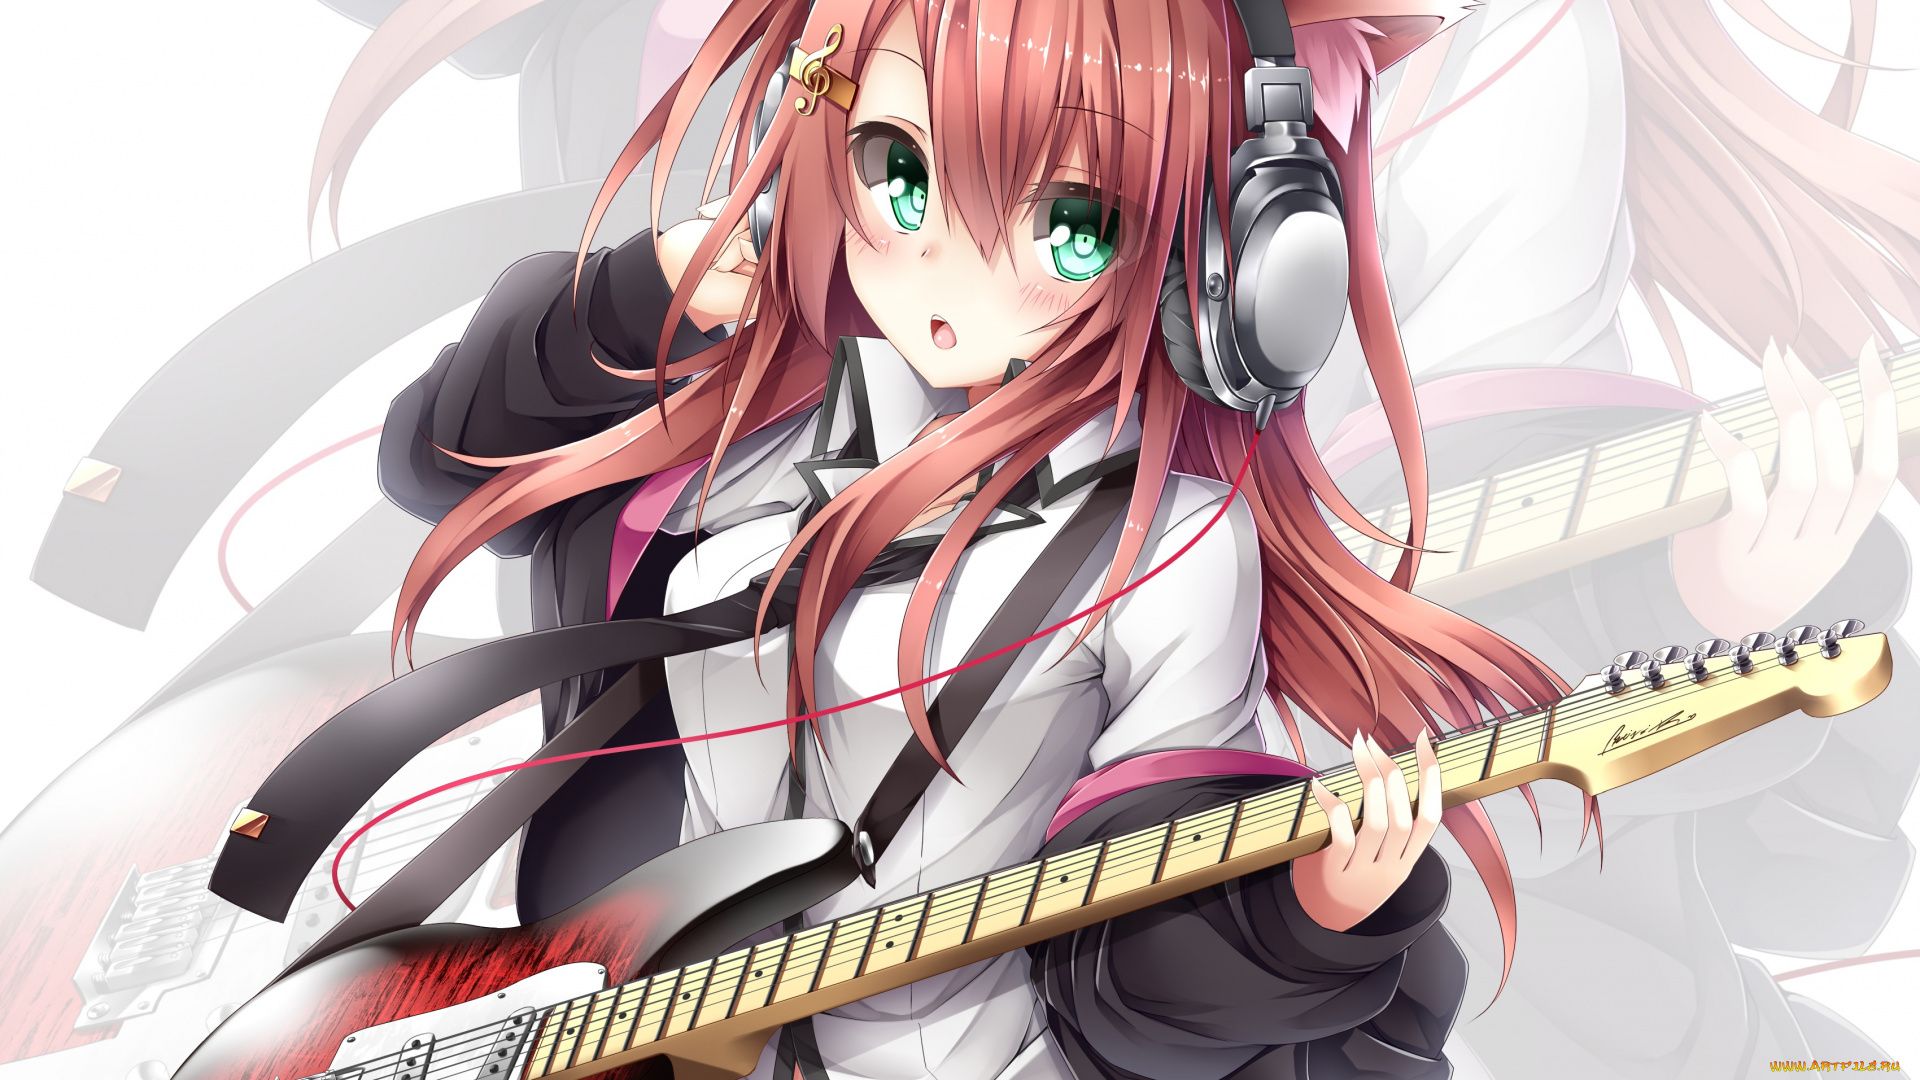 Neko Anime Girl With Guitar